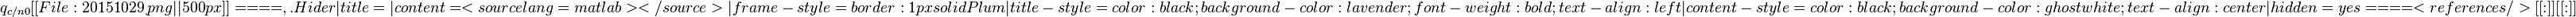 q_{c/n0}

[[File:20151029_Сравнение СКО.png|центр|500px]]

== Листинг модели ==
Ниже представлен листинг модели, с которой сняты картинки.
{{Hider
 |title = Листинг модели
 |content = <source lang = matlab>
 бла бла бла
</source>
 |frame-style = border:1px solid Plum
 |title-style = color:black;background-color:lavender;font-weight:bold;text-align:left
 |content-style = color:black;background-color:ghostwhite;text-align:center
 |hidden = yes 
}}

== Ссылки ==
<references/>

[[Категория:Дискриминаторы]]
[[Категория:Оценивание частоты]]